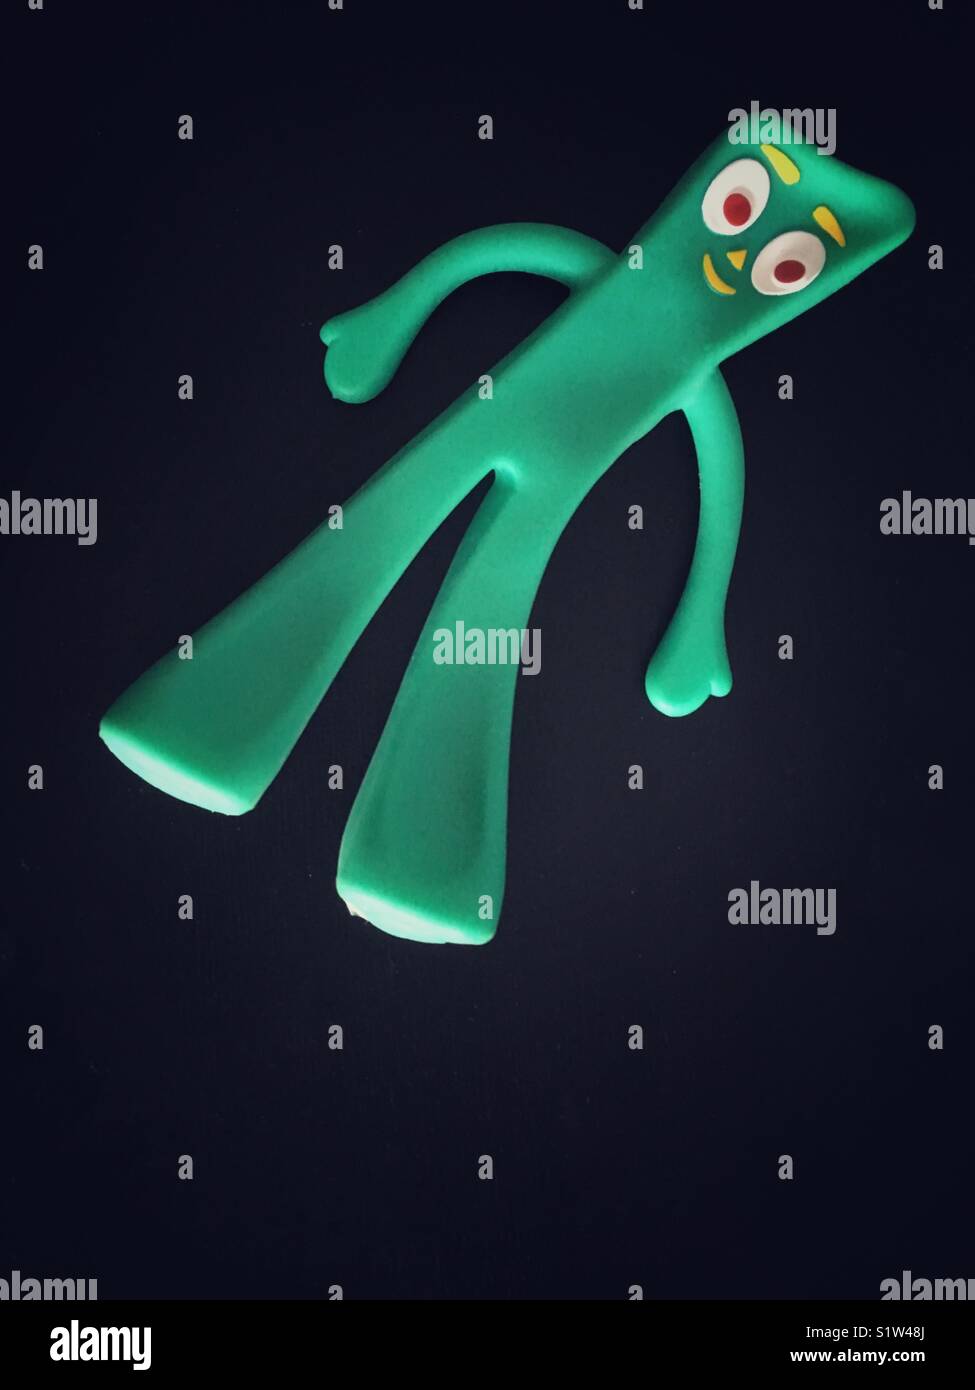 Gumby toy Stock Photo